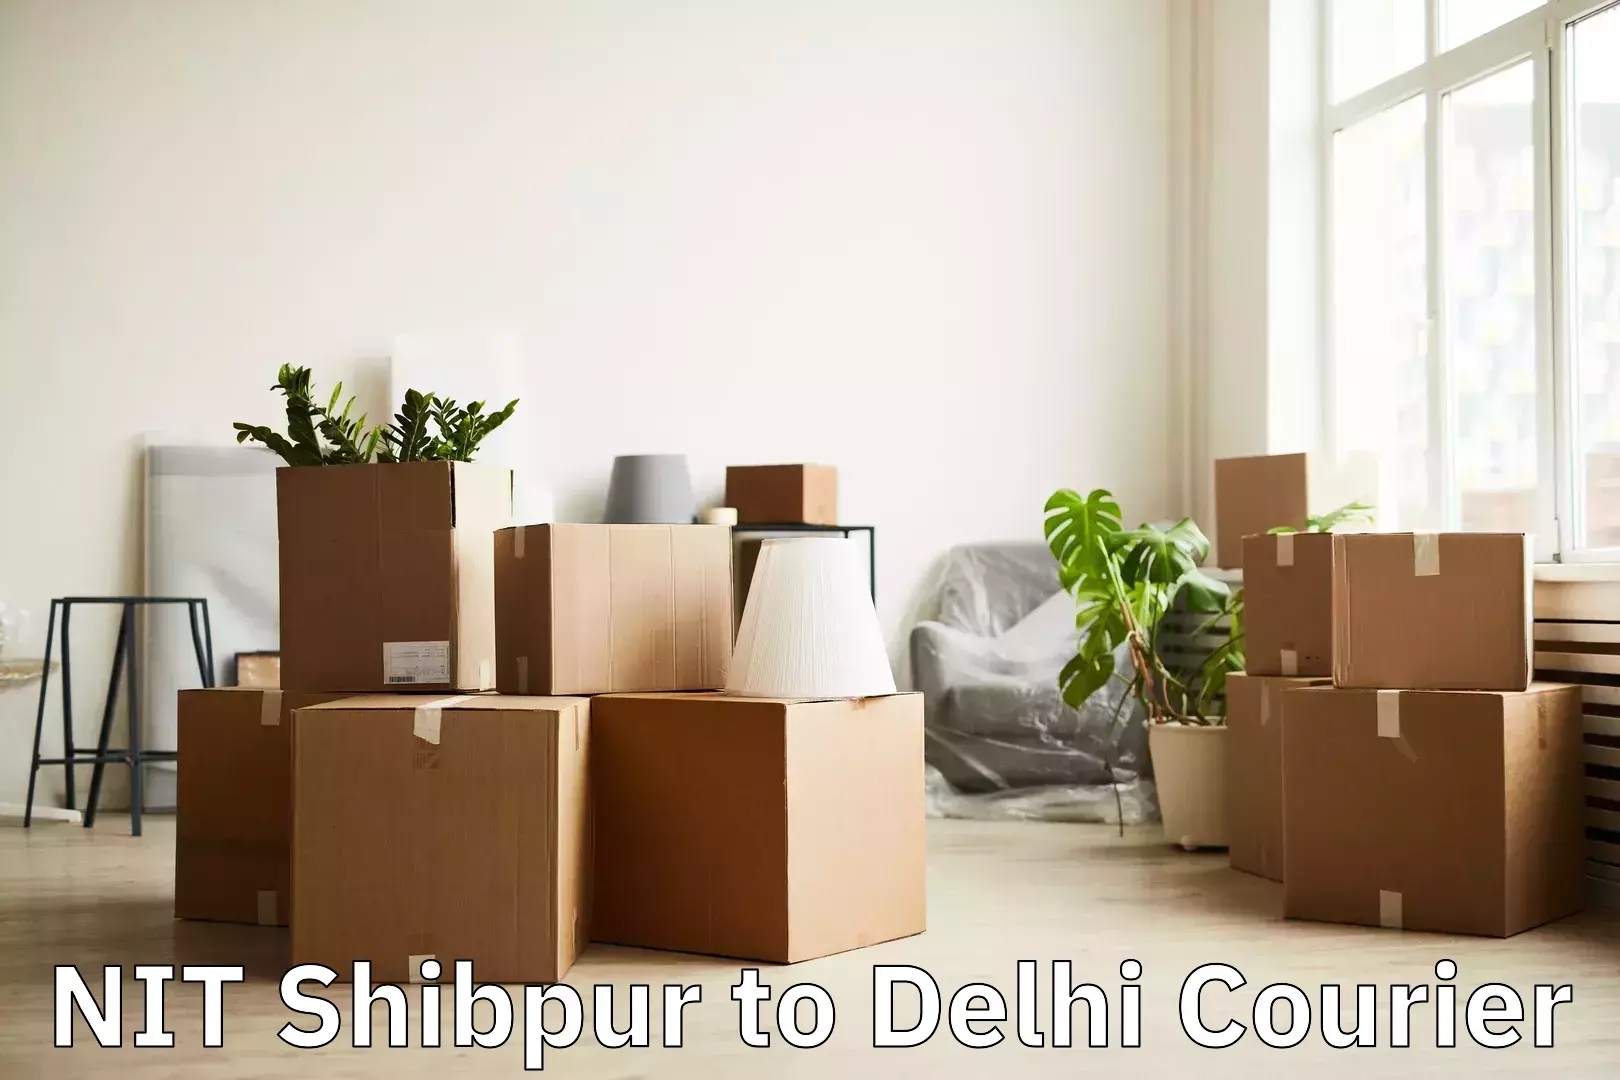 Regional luggage transport in NIT Shibpur to University of Delhi